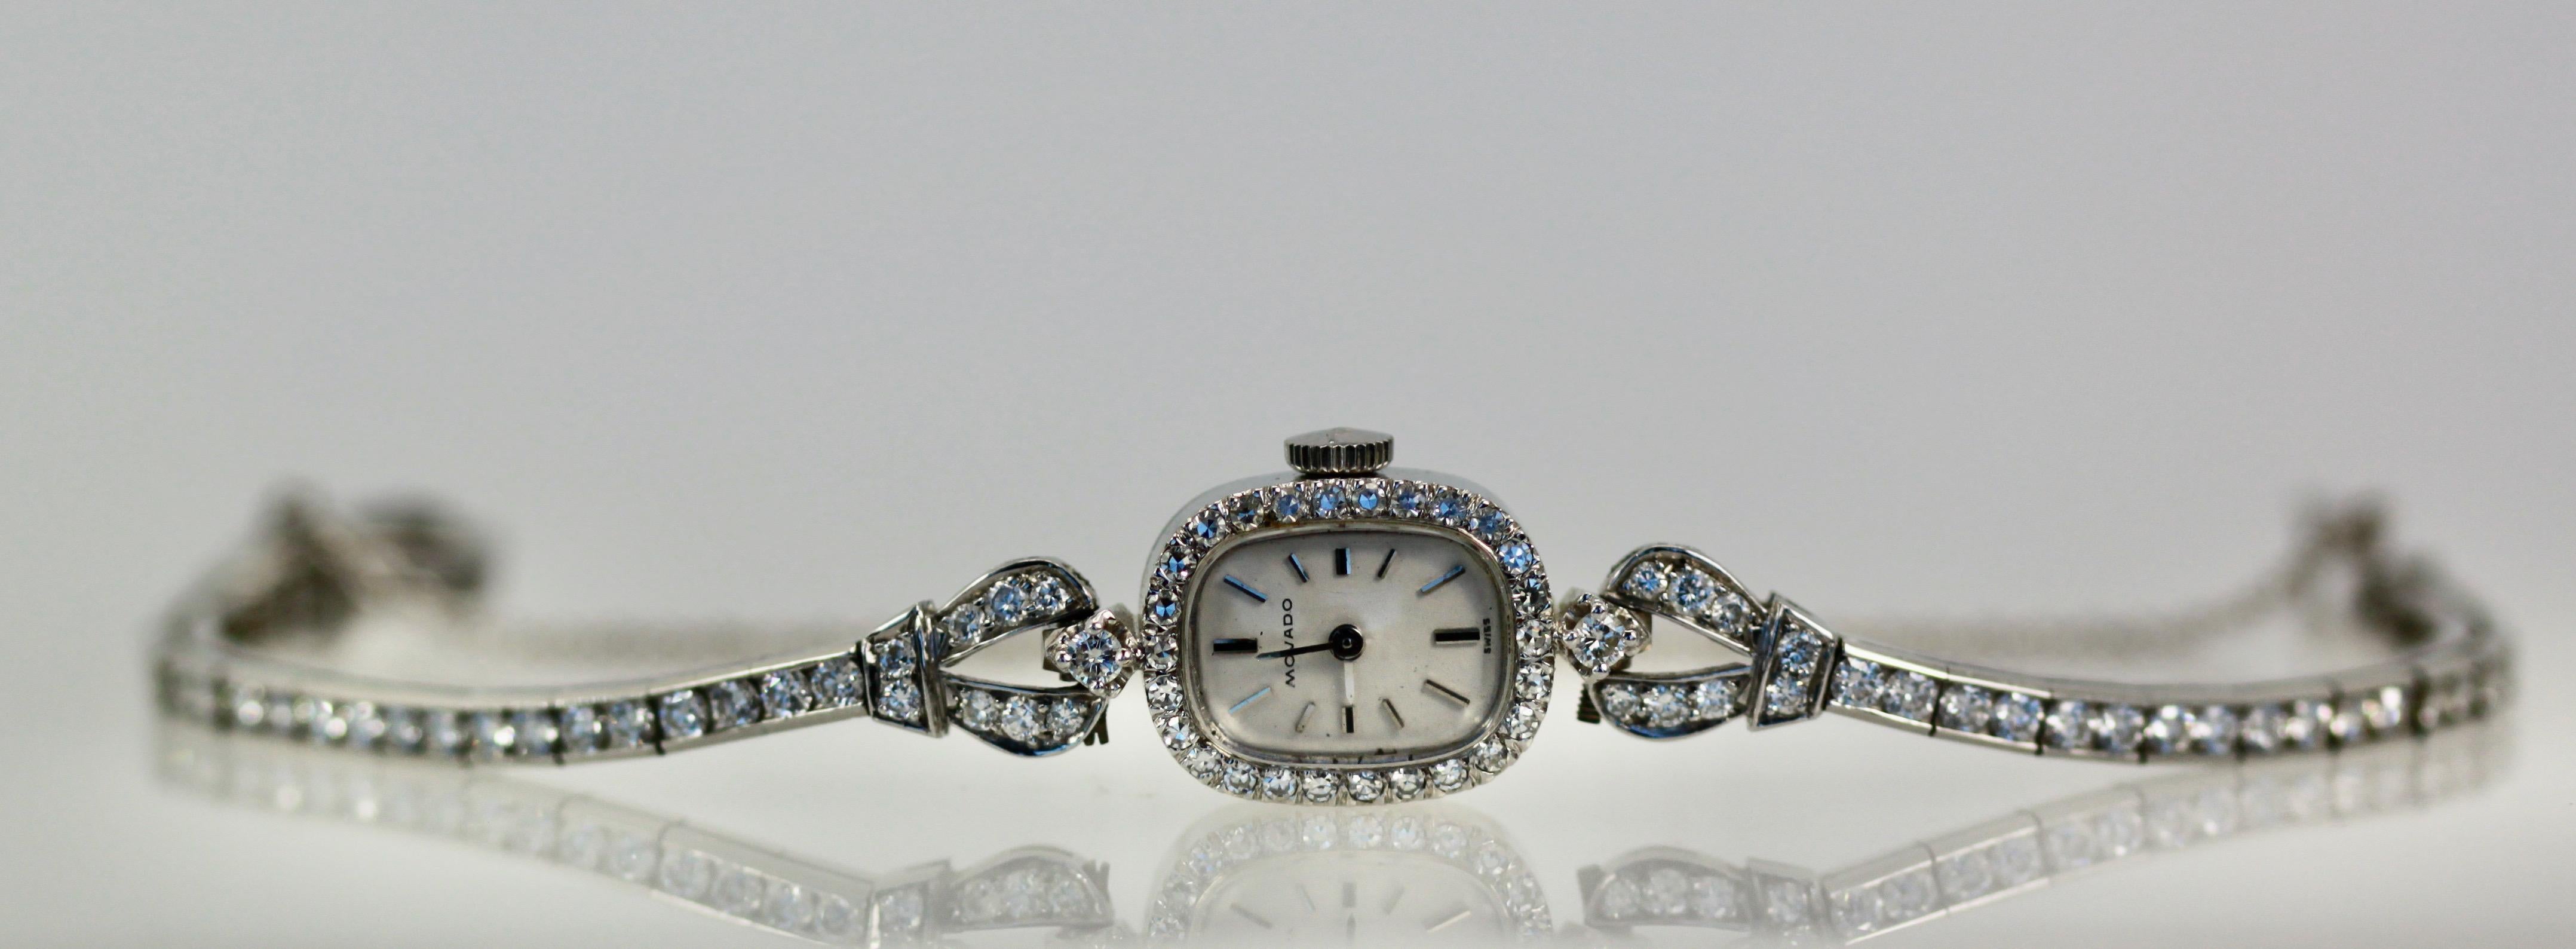 Movado Ladies Diamond Wristwatch 14K For Sale 2